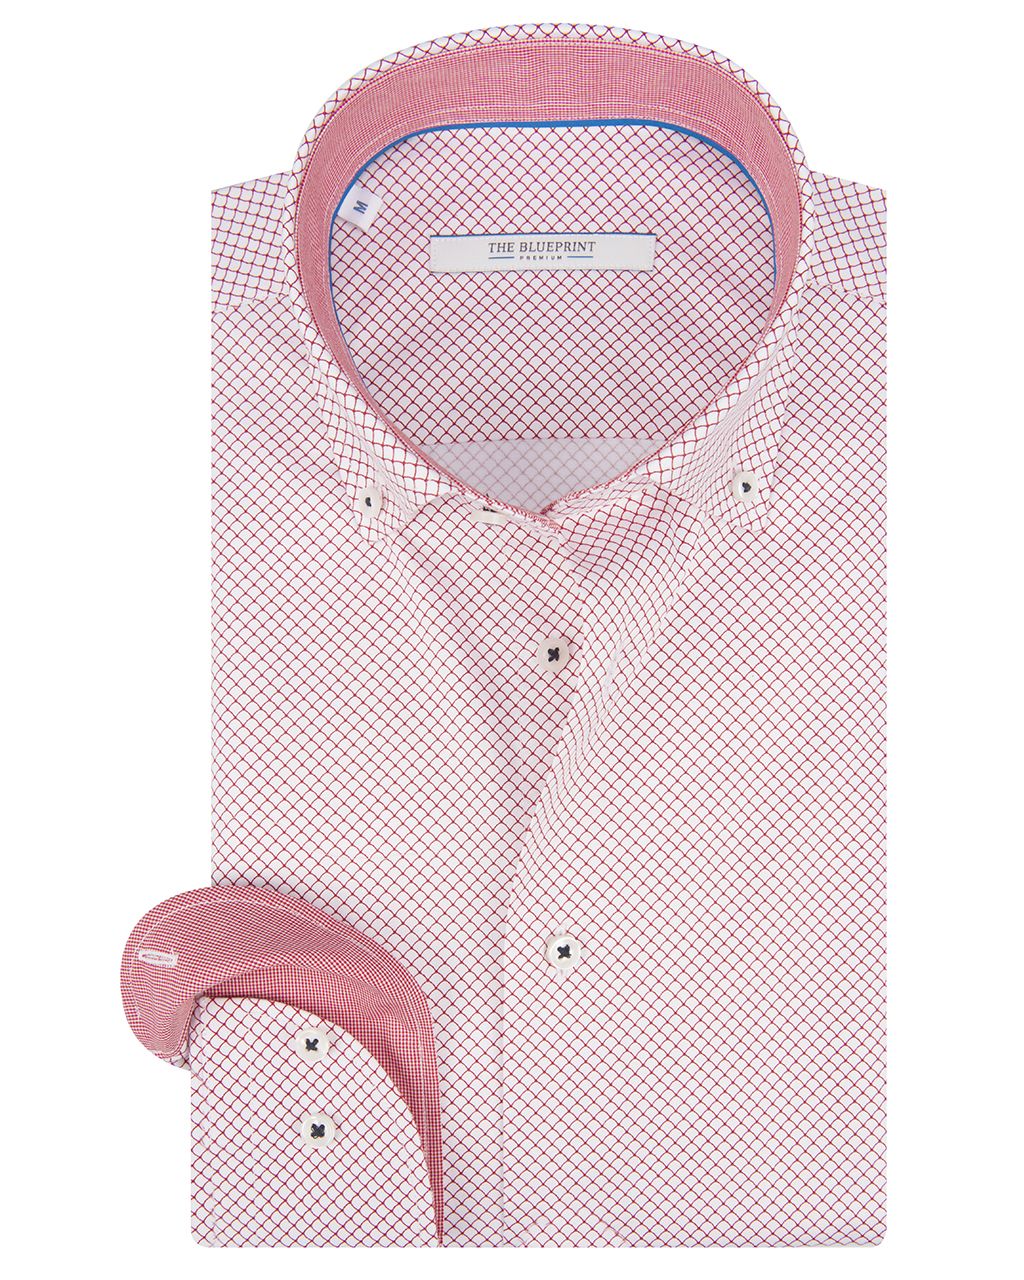 The BLUEPRINT Premium Trendy overhemd LM Rood print 061874-001-L